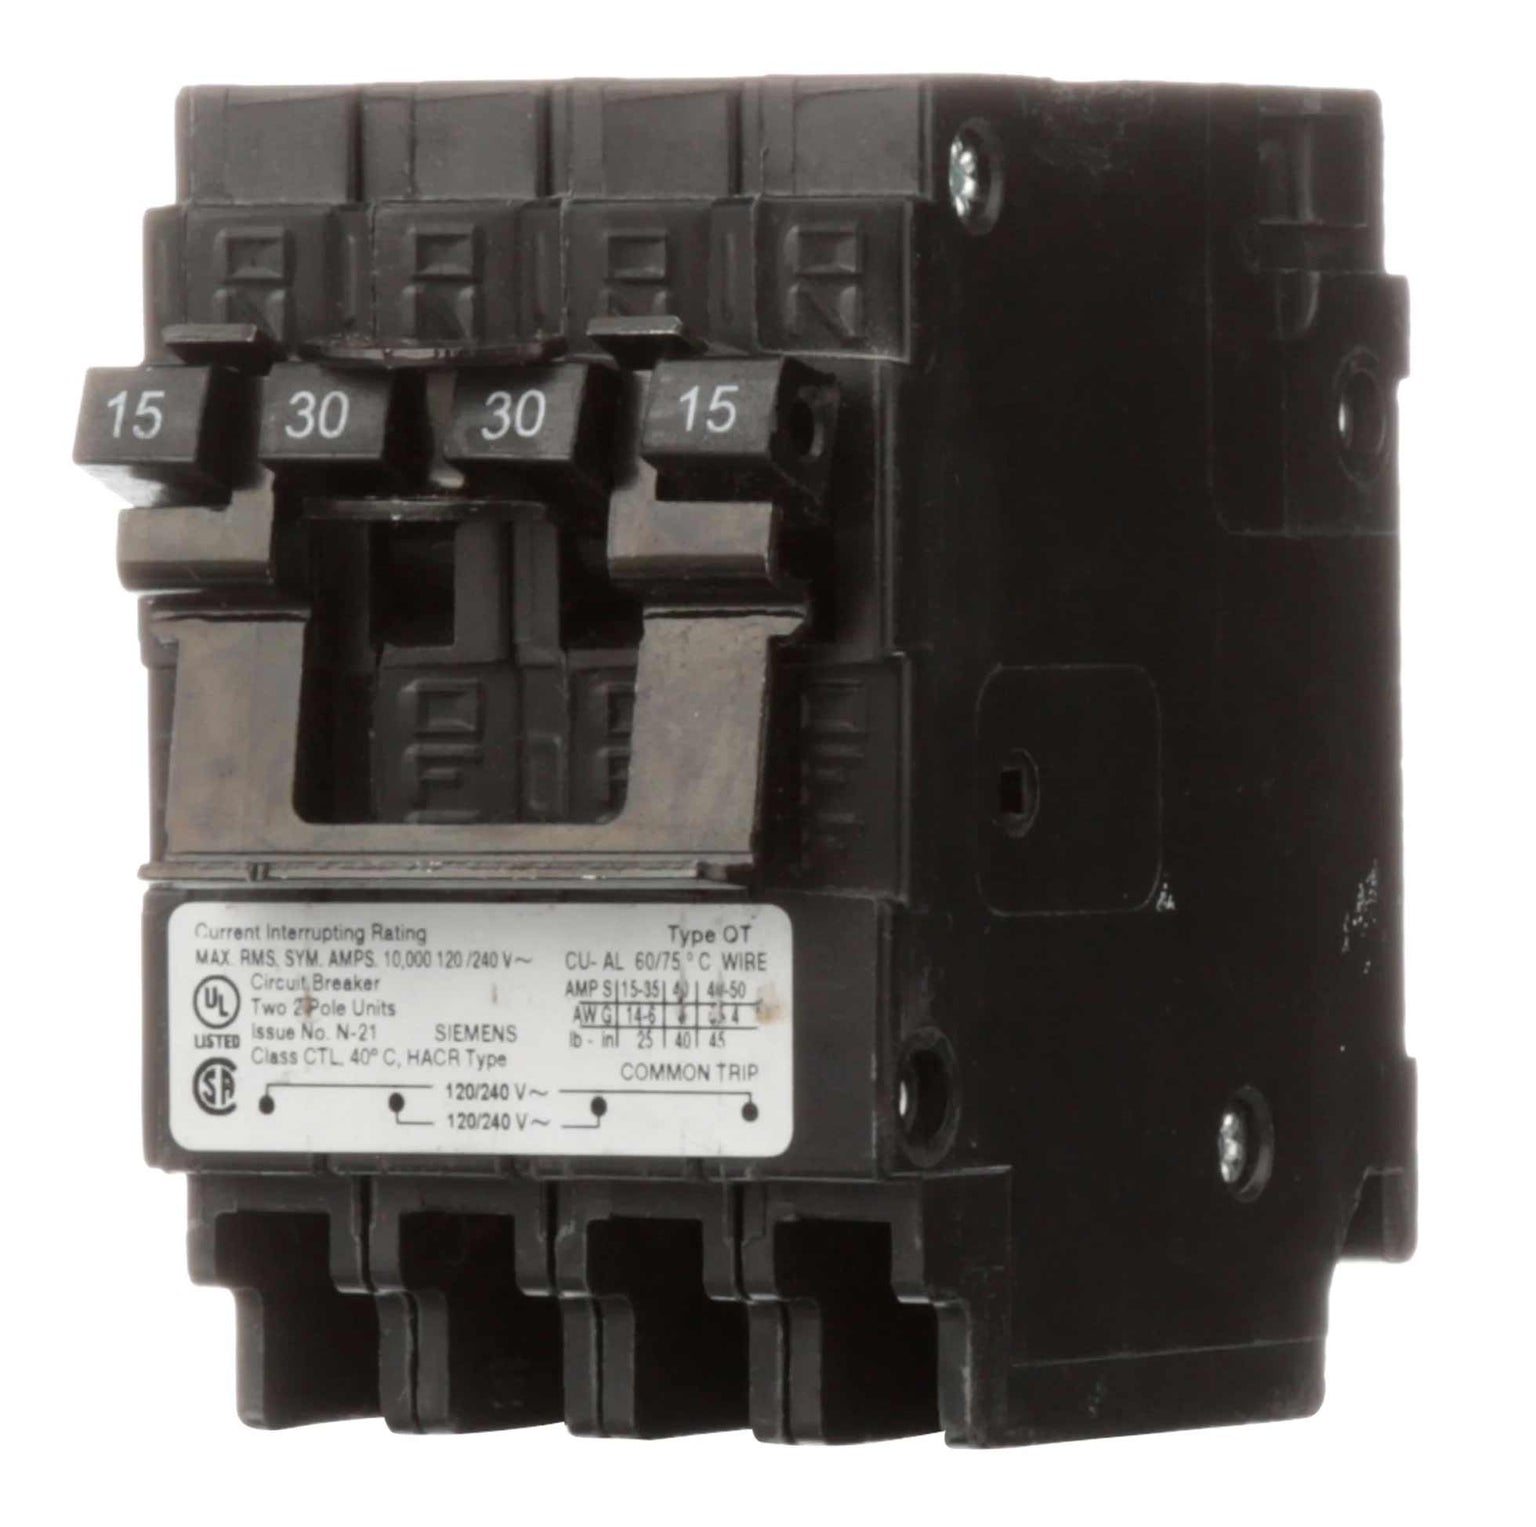 Q21530CT2 - Siemens - 30 Amp Molded Case Circuit Breaker